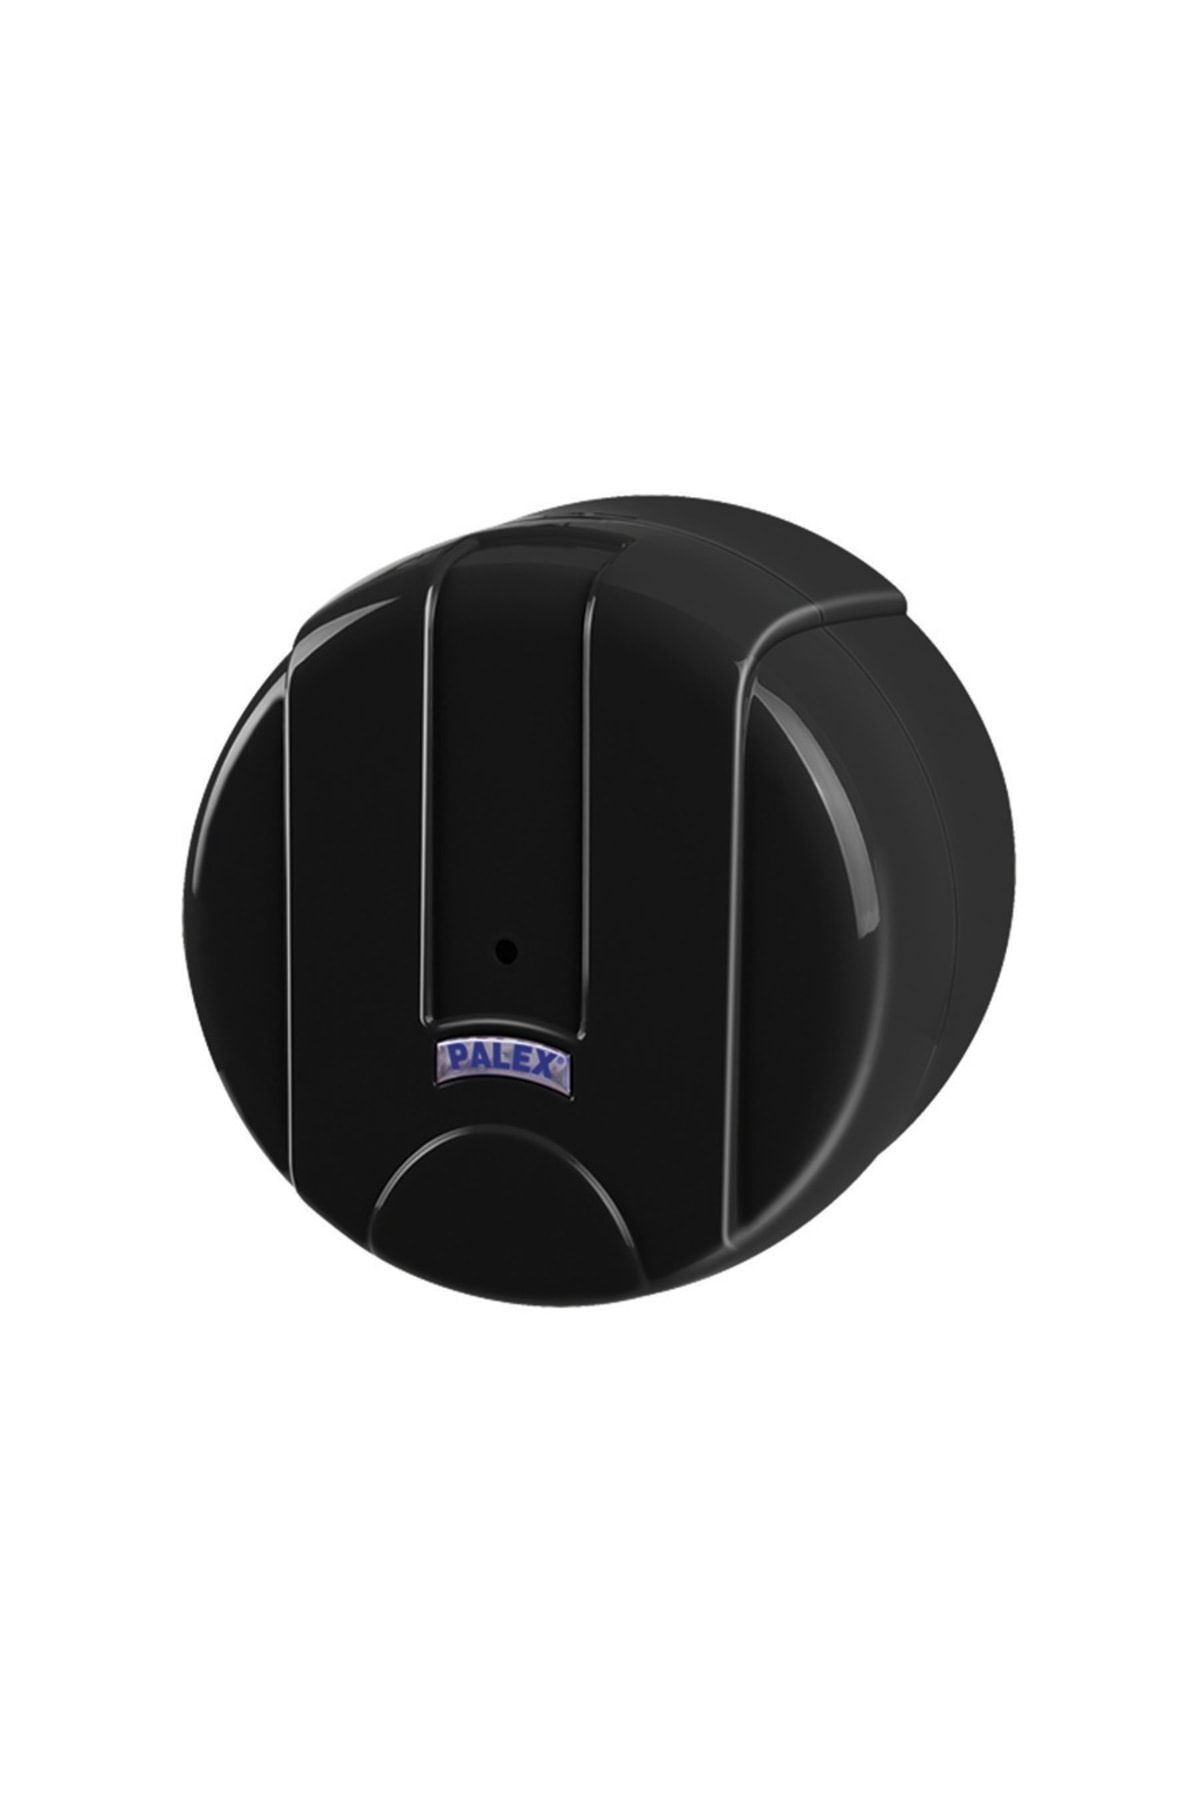 Palex 3442-s Mini Pratik Tuvalet Kağıdı Dispenseri Siyah